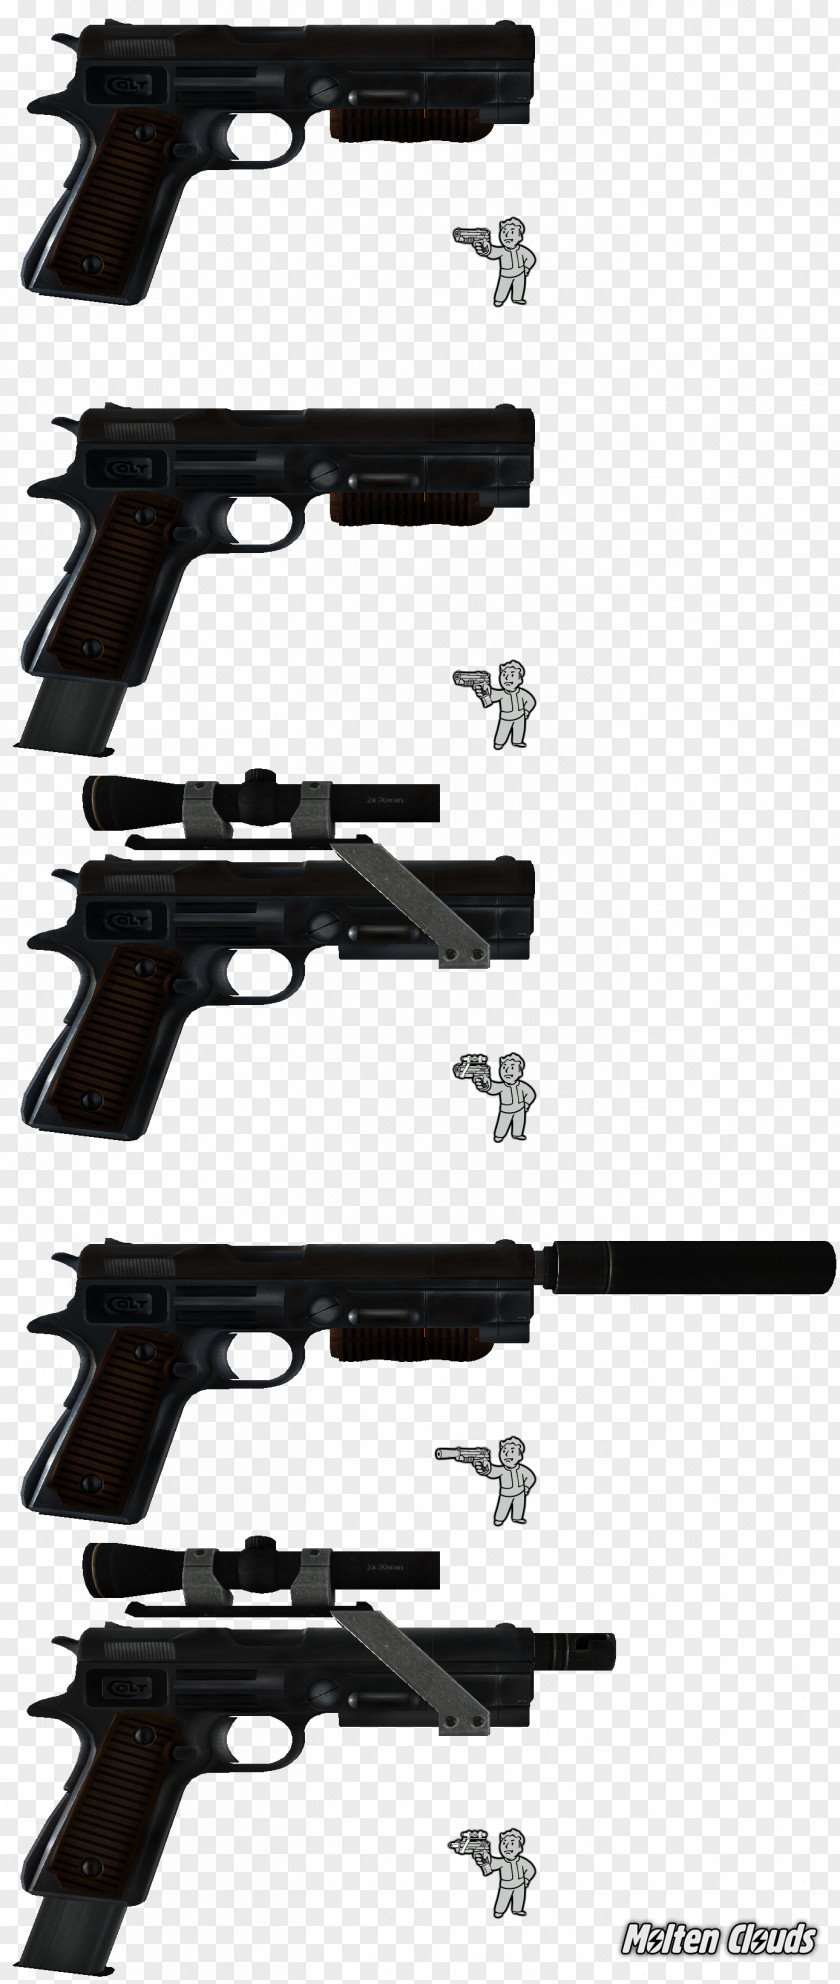 Handgun Trigger Firearm Air Gun DAX MONTHLY HEDGED TR JPY PNG